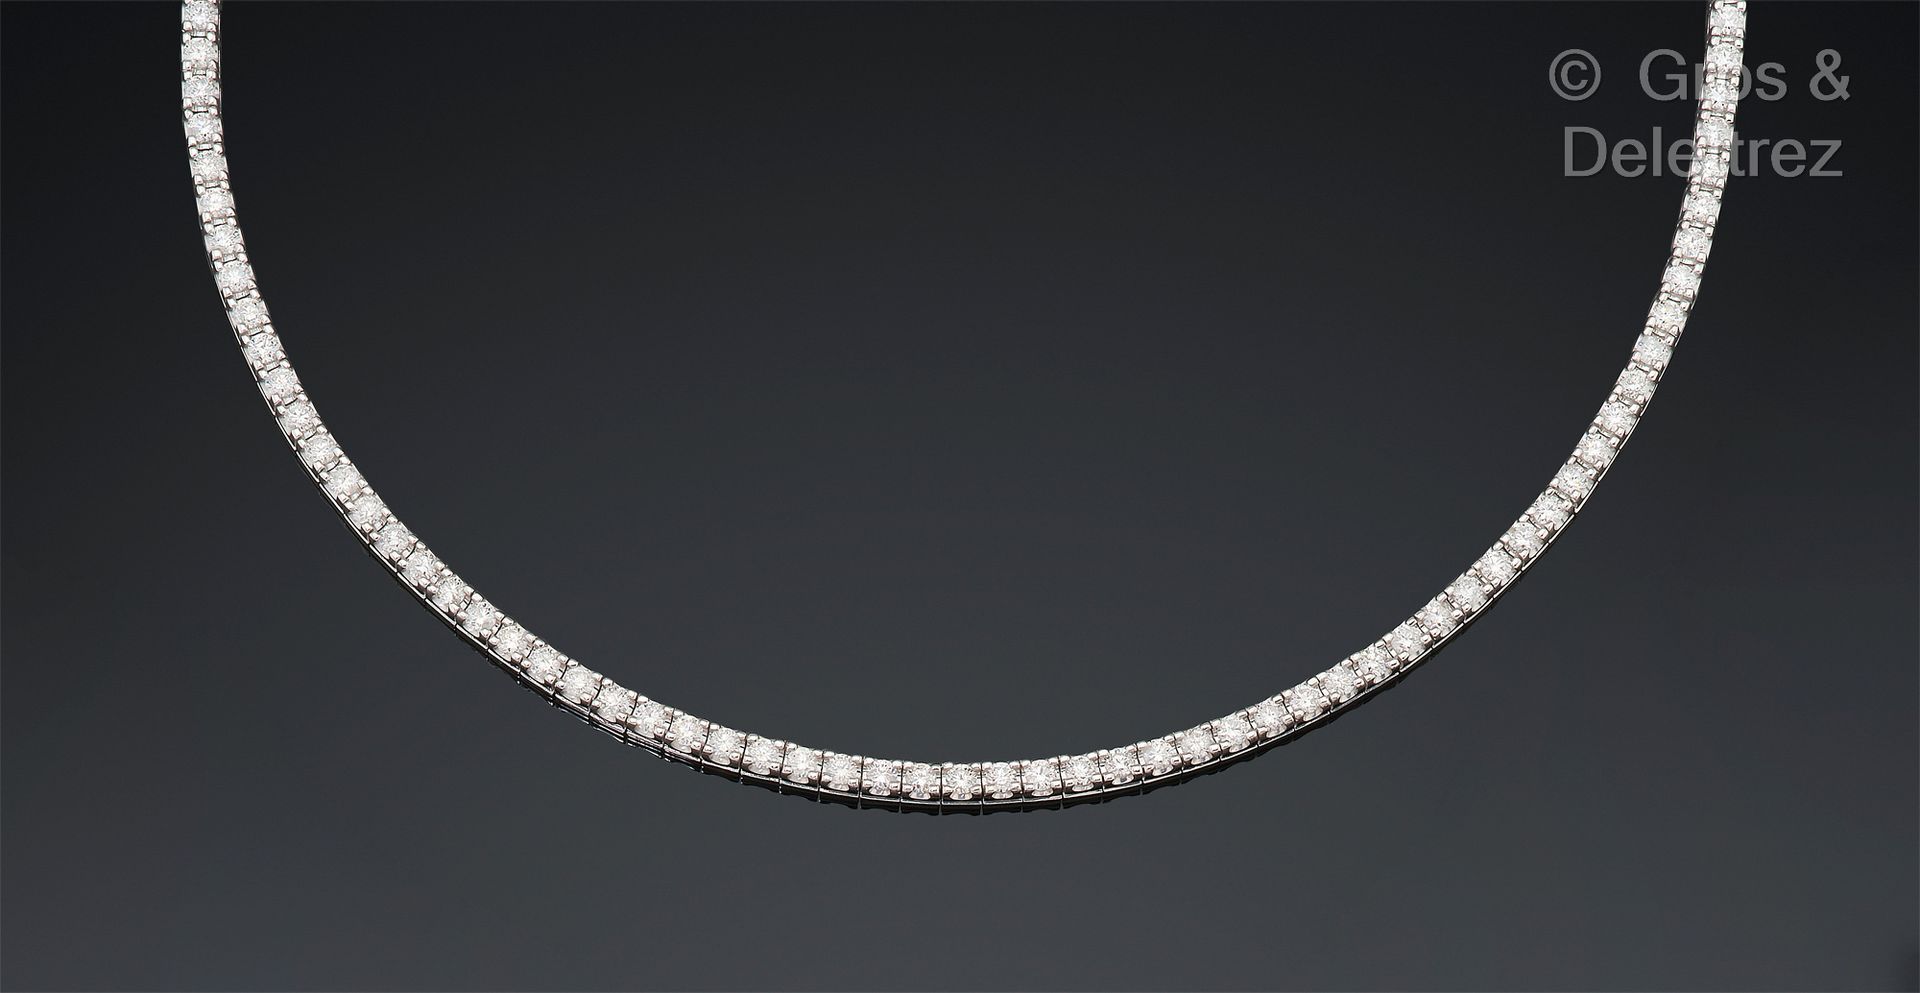 Null Ligne "白金项链，全部镶嵌明亮式切割钻石。长度：41.2厘米。毛重：30.3克。